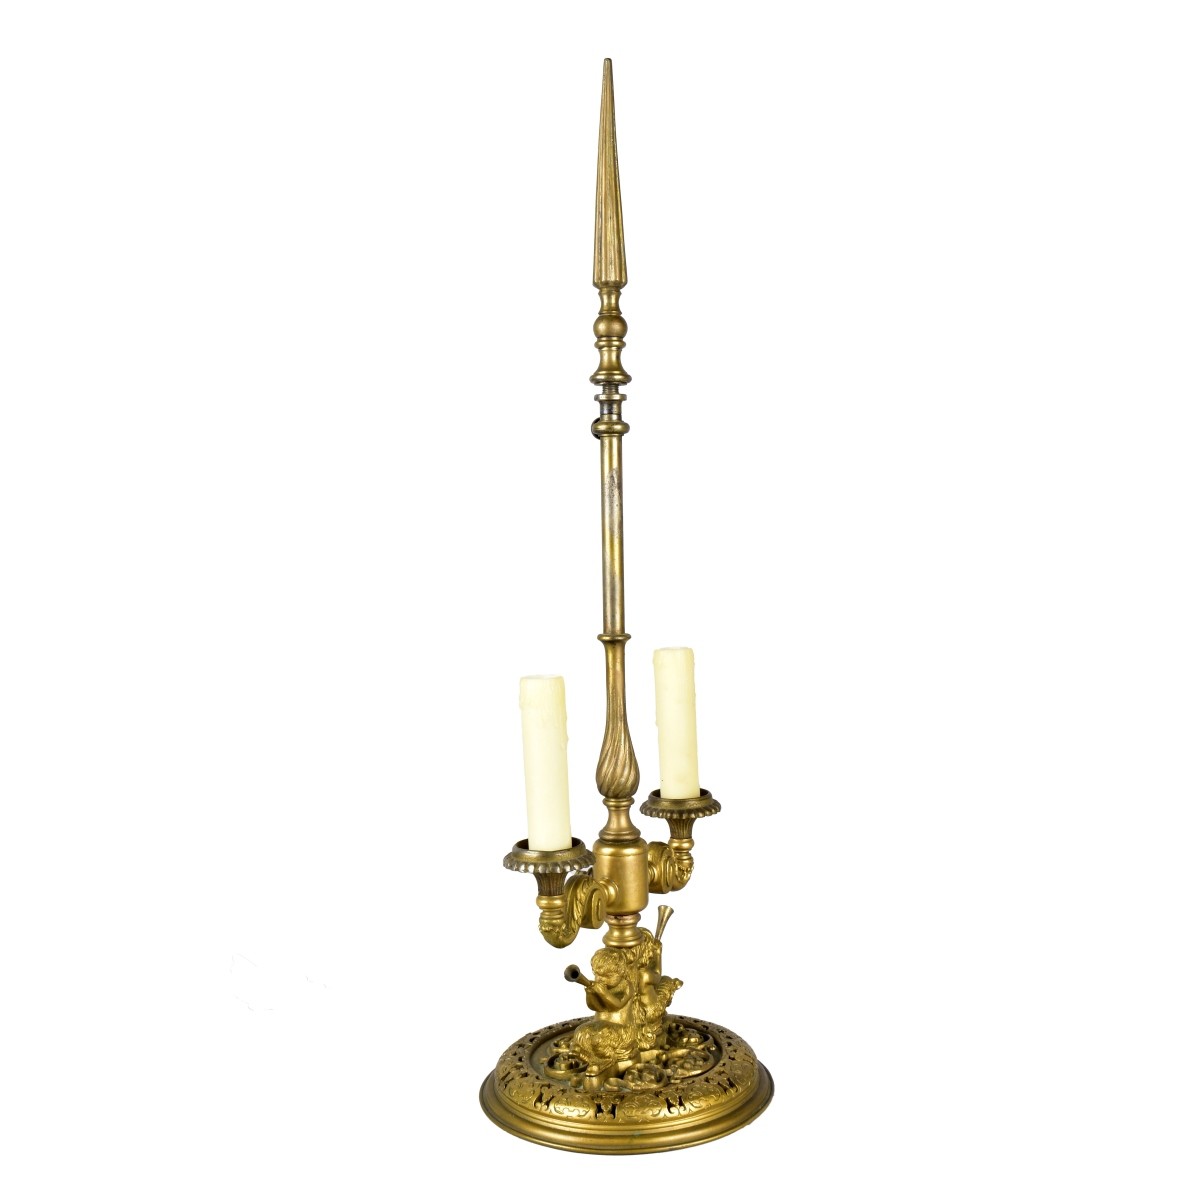 Antique French Empire Style Bouliette Lamp